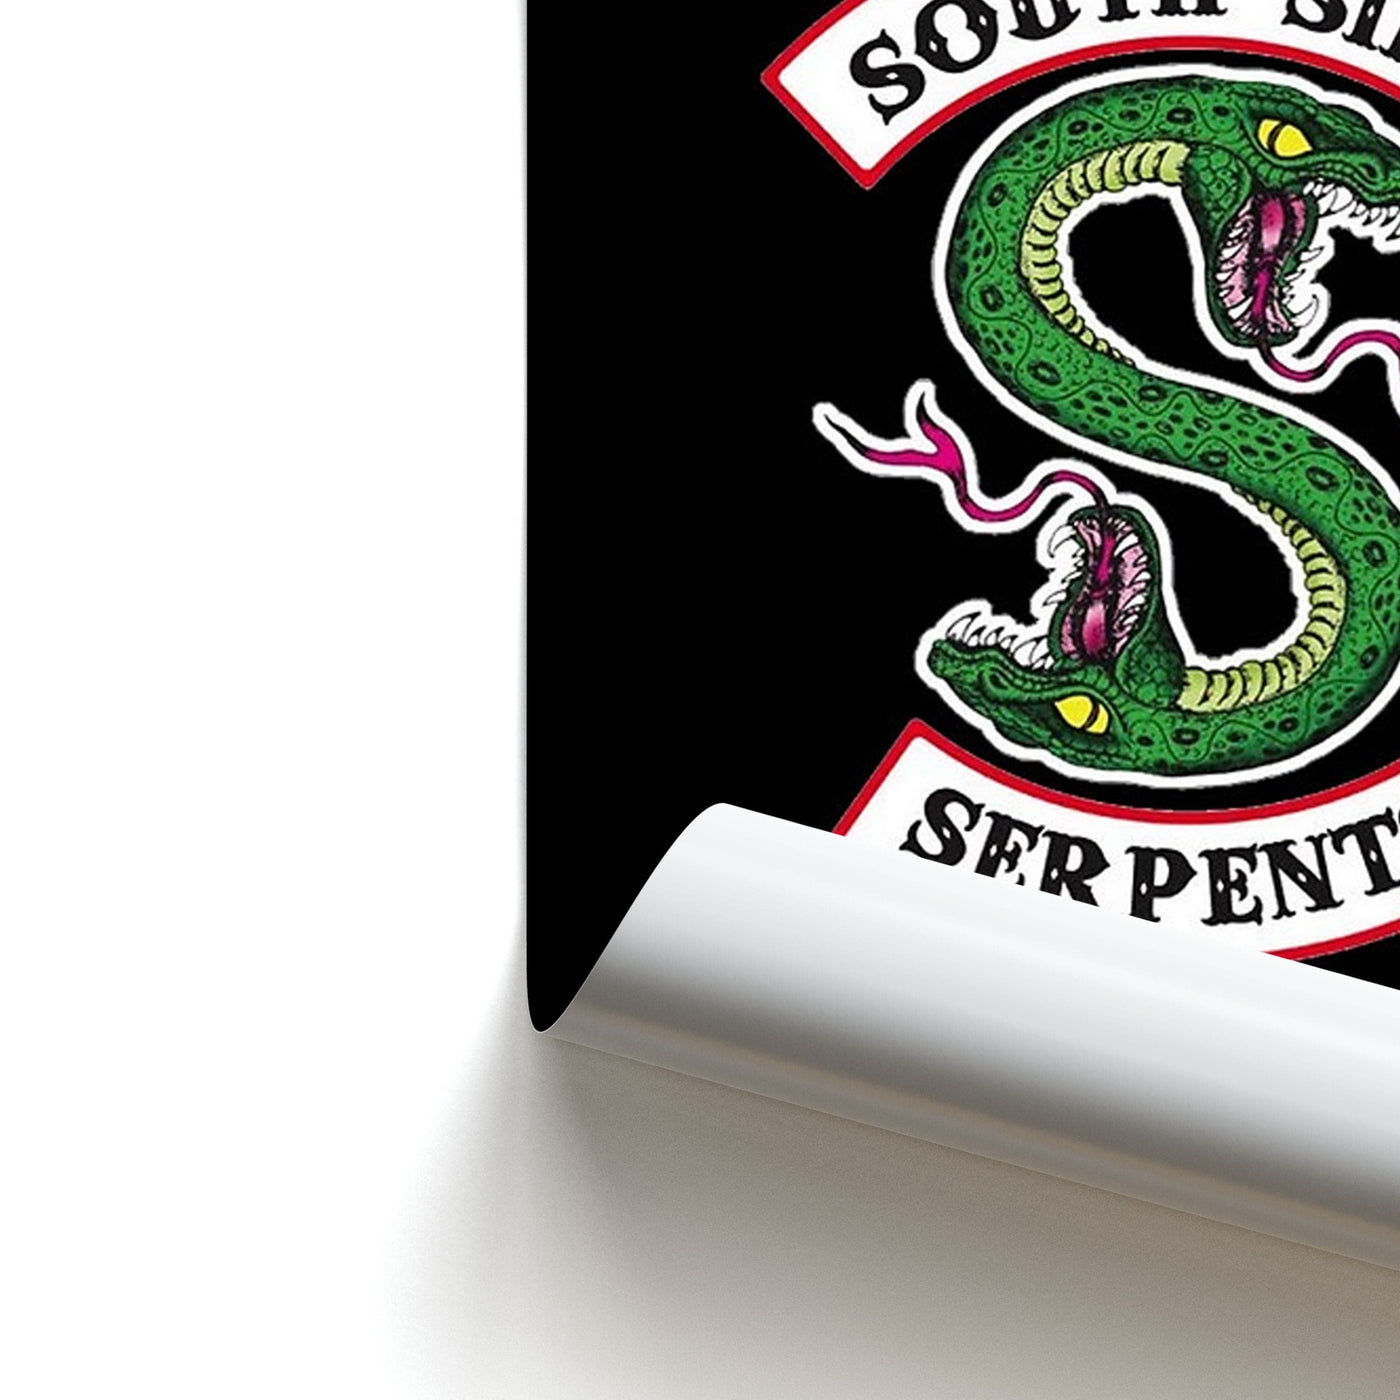 Southside Serpents - Riverdale Poster